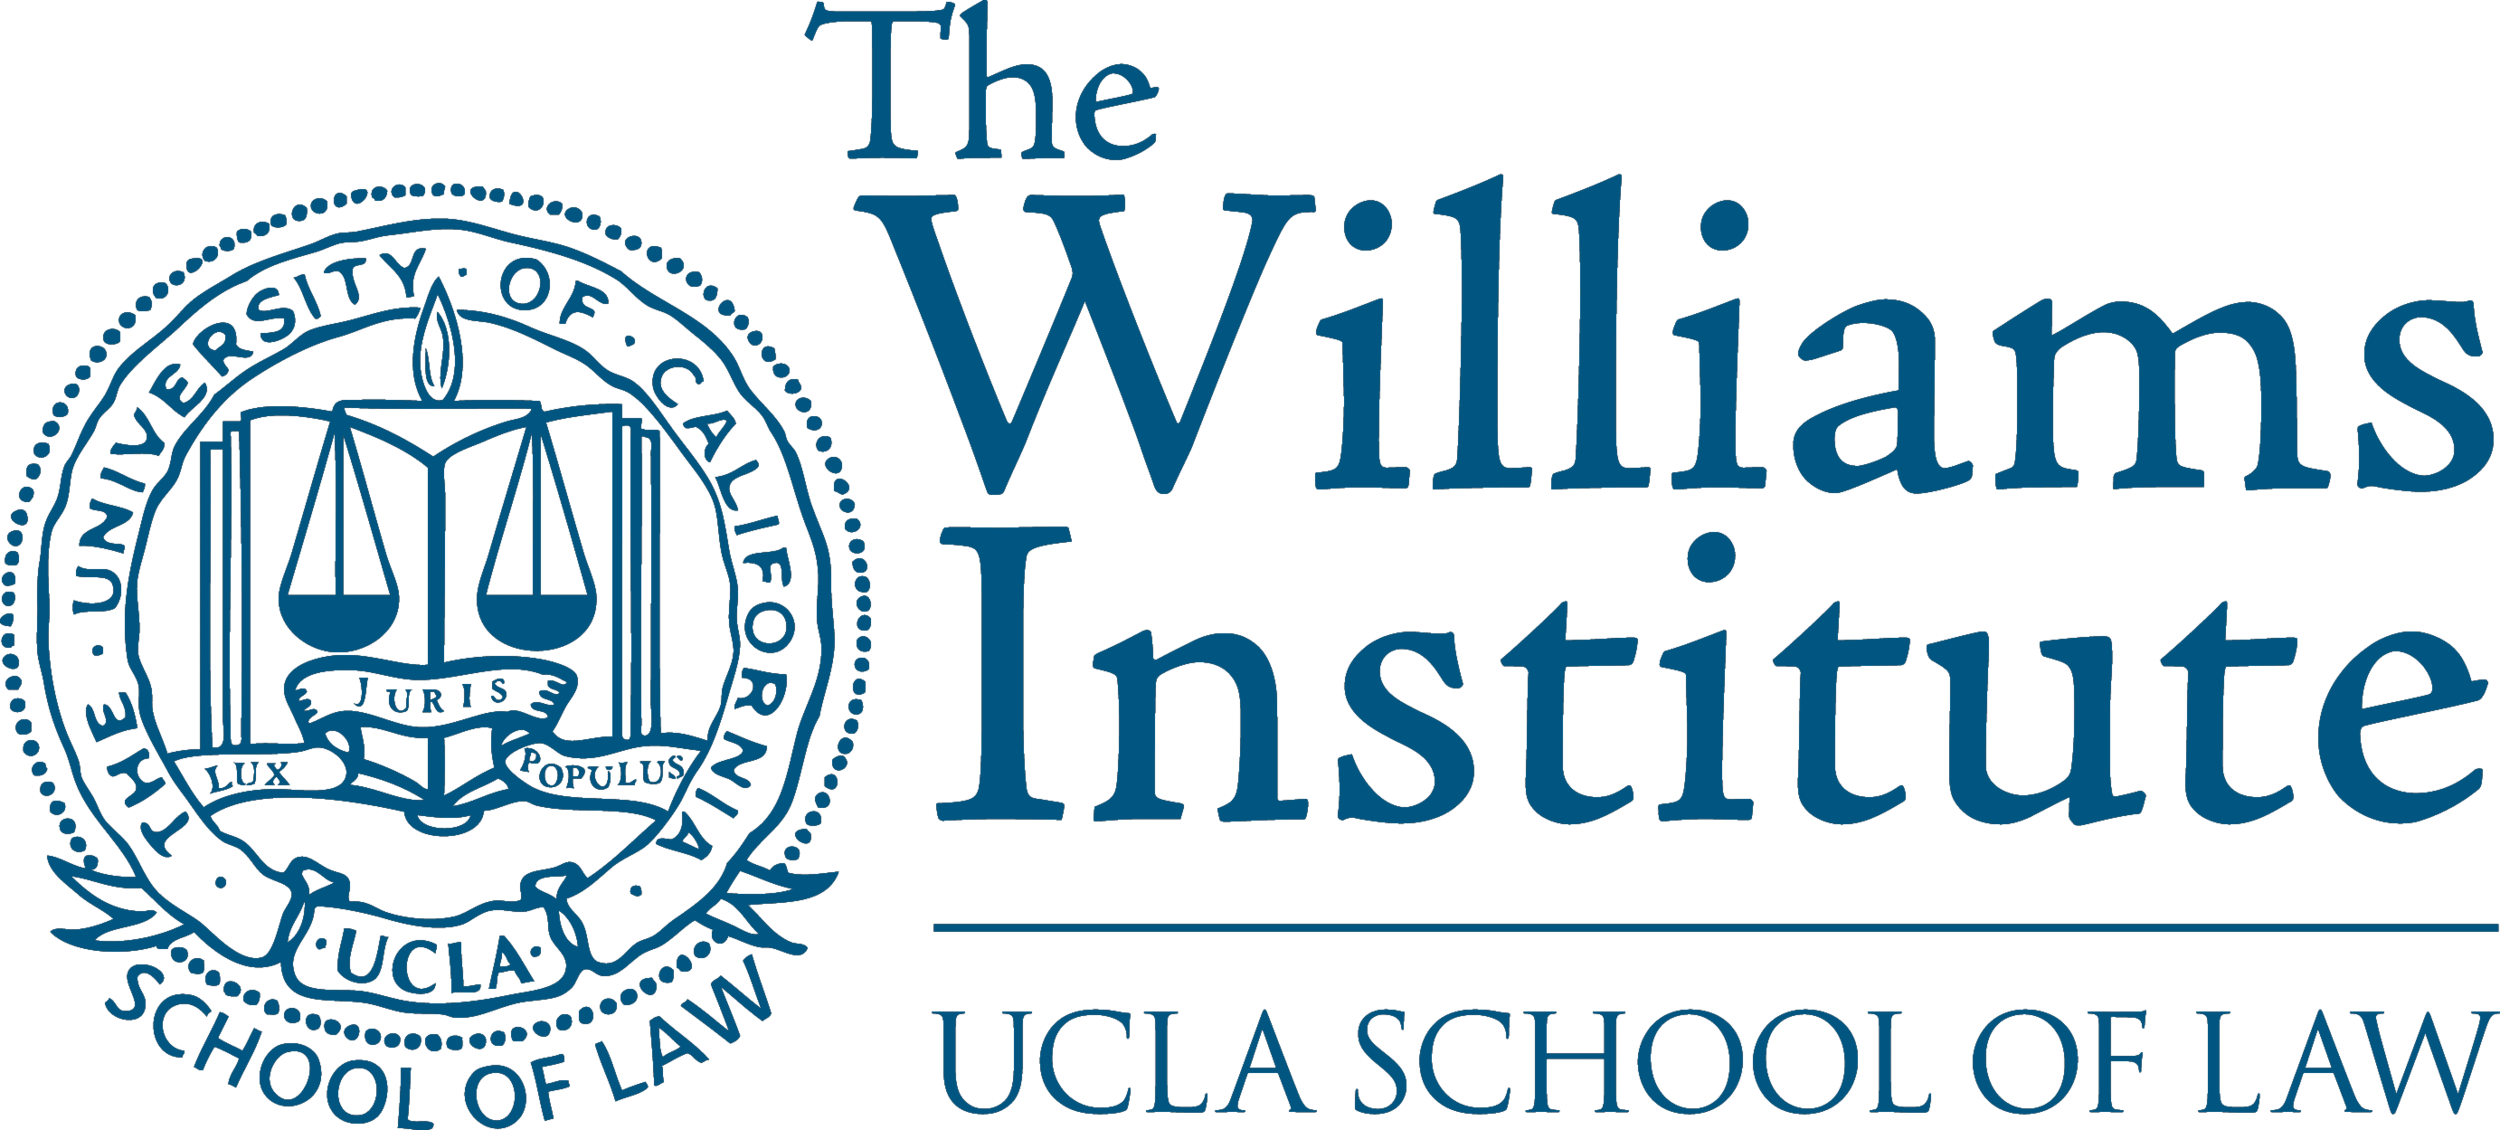 WI-UCLA-logo-blue.png